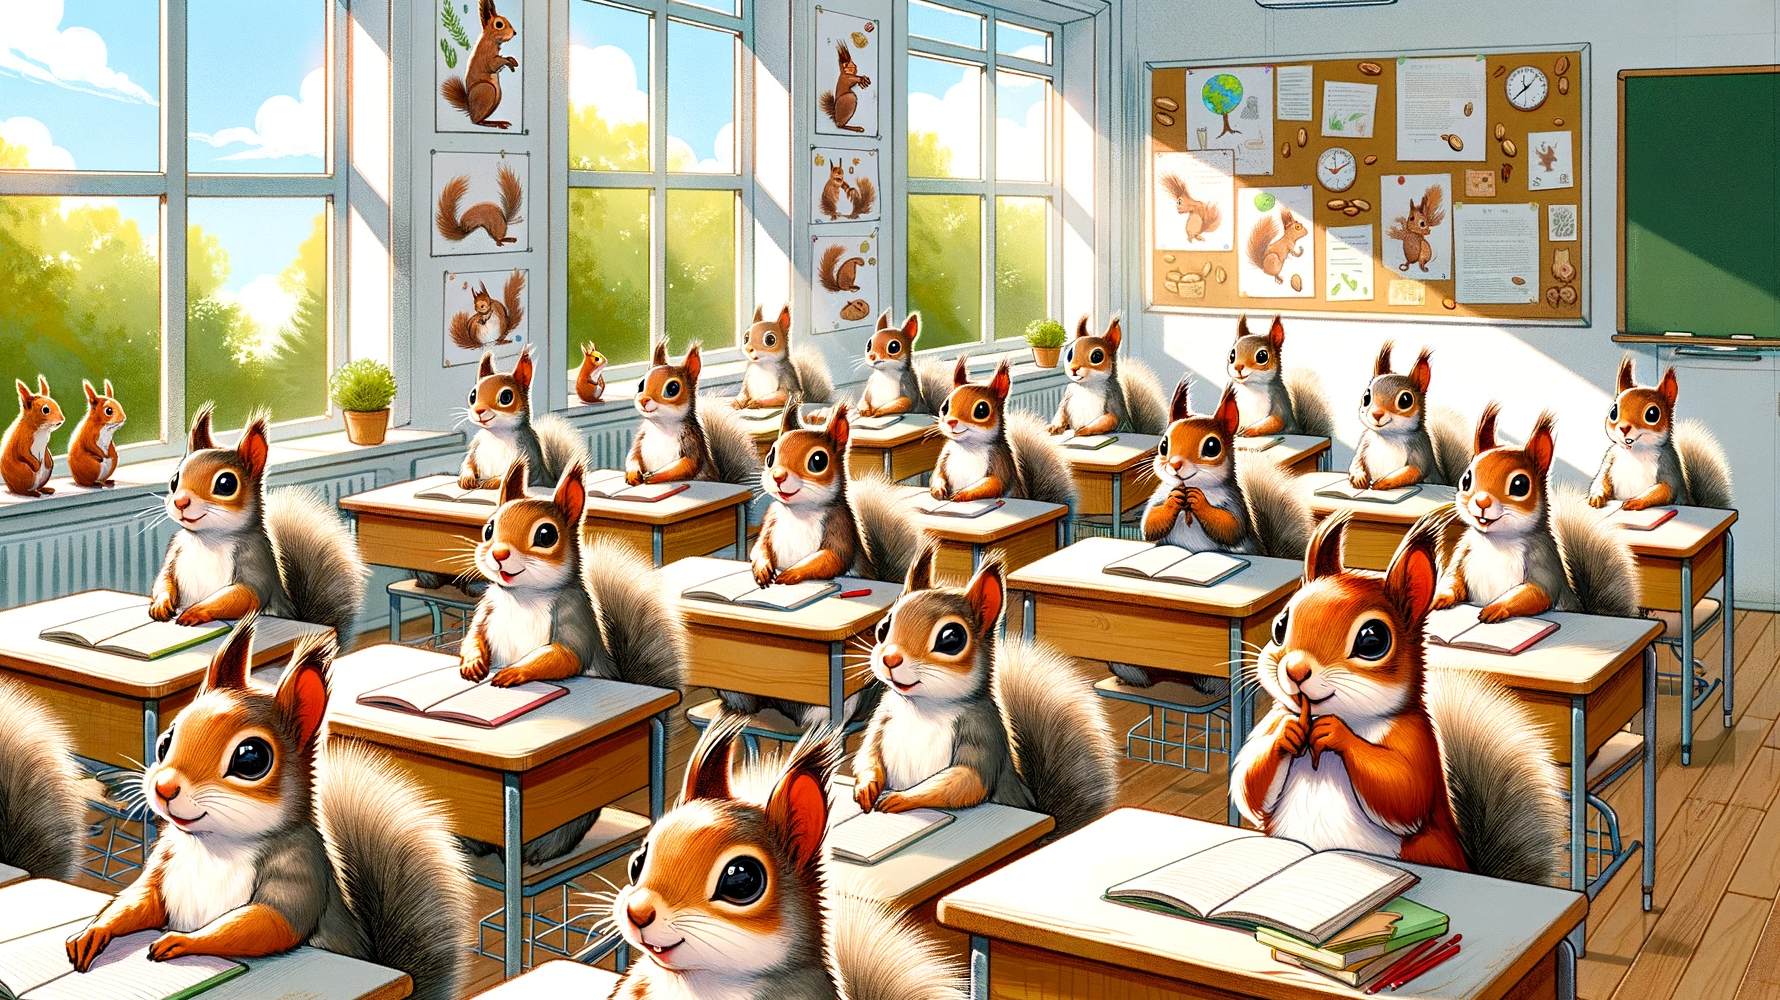 Classroom full of squirrels